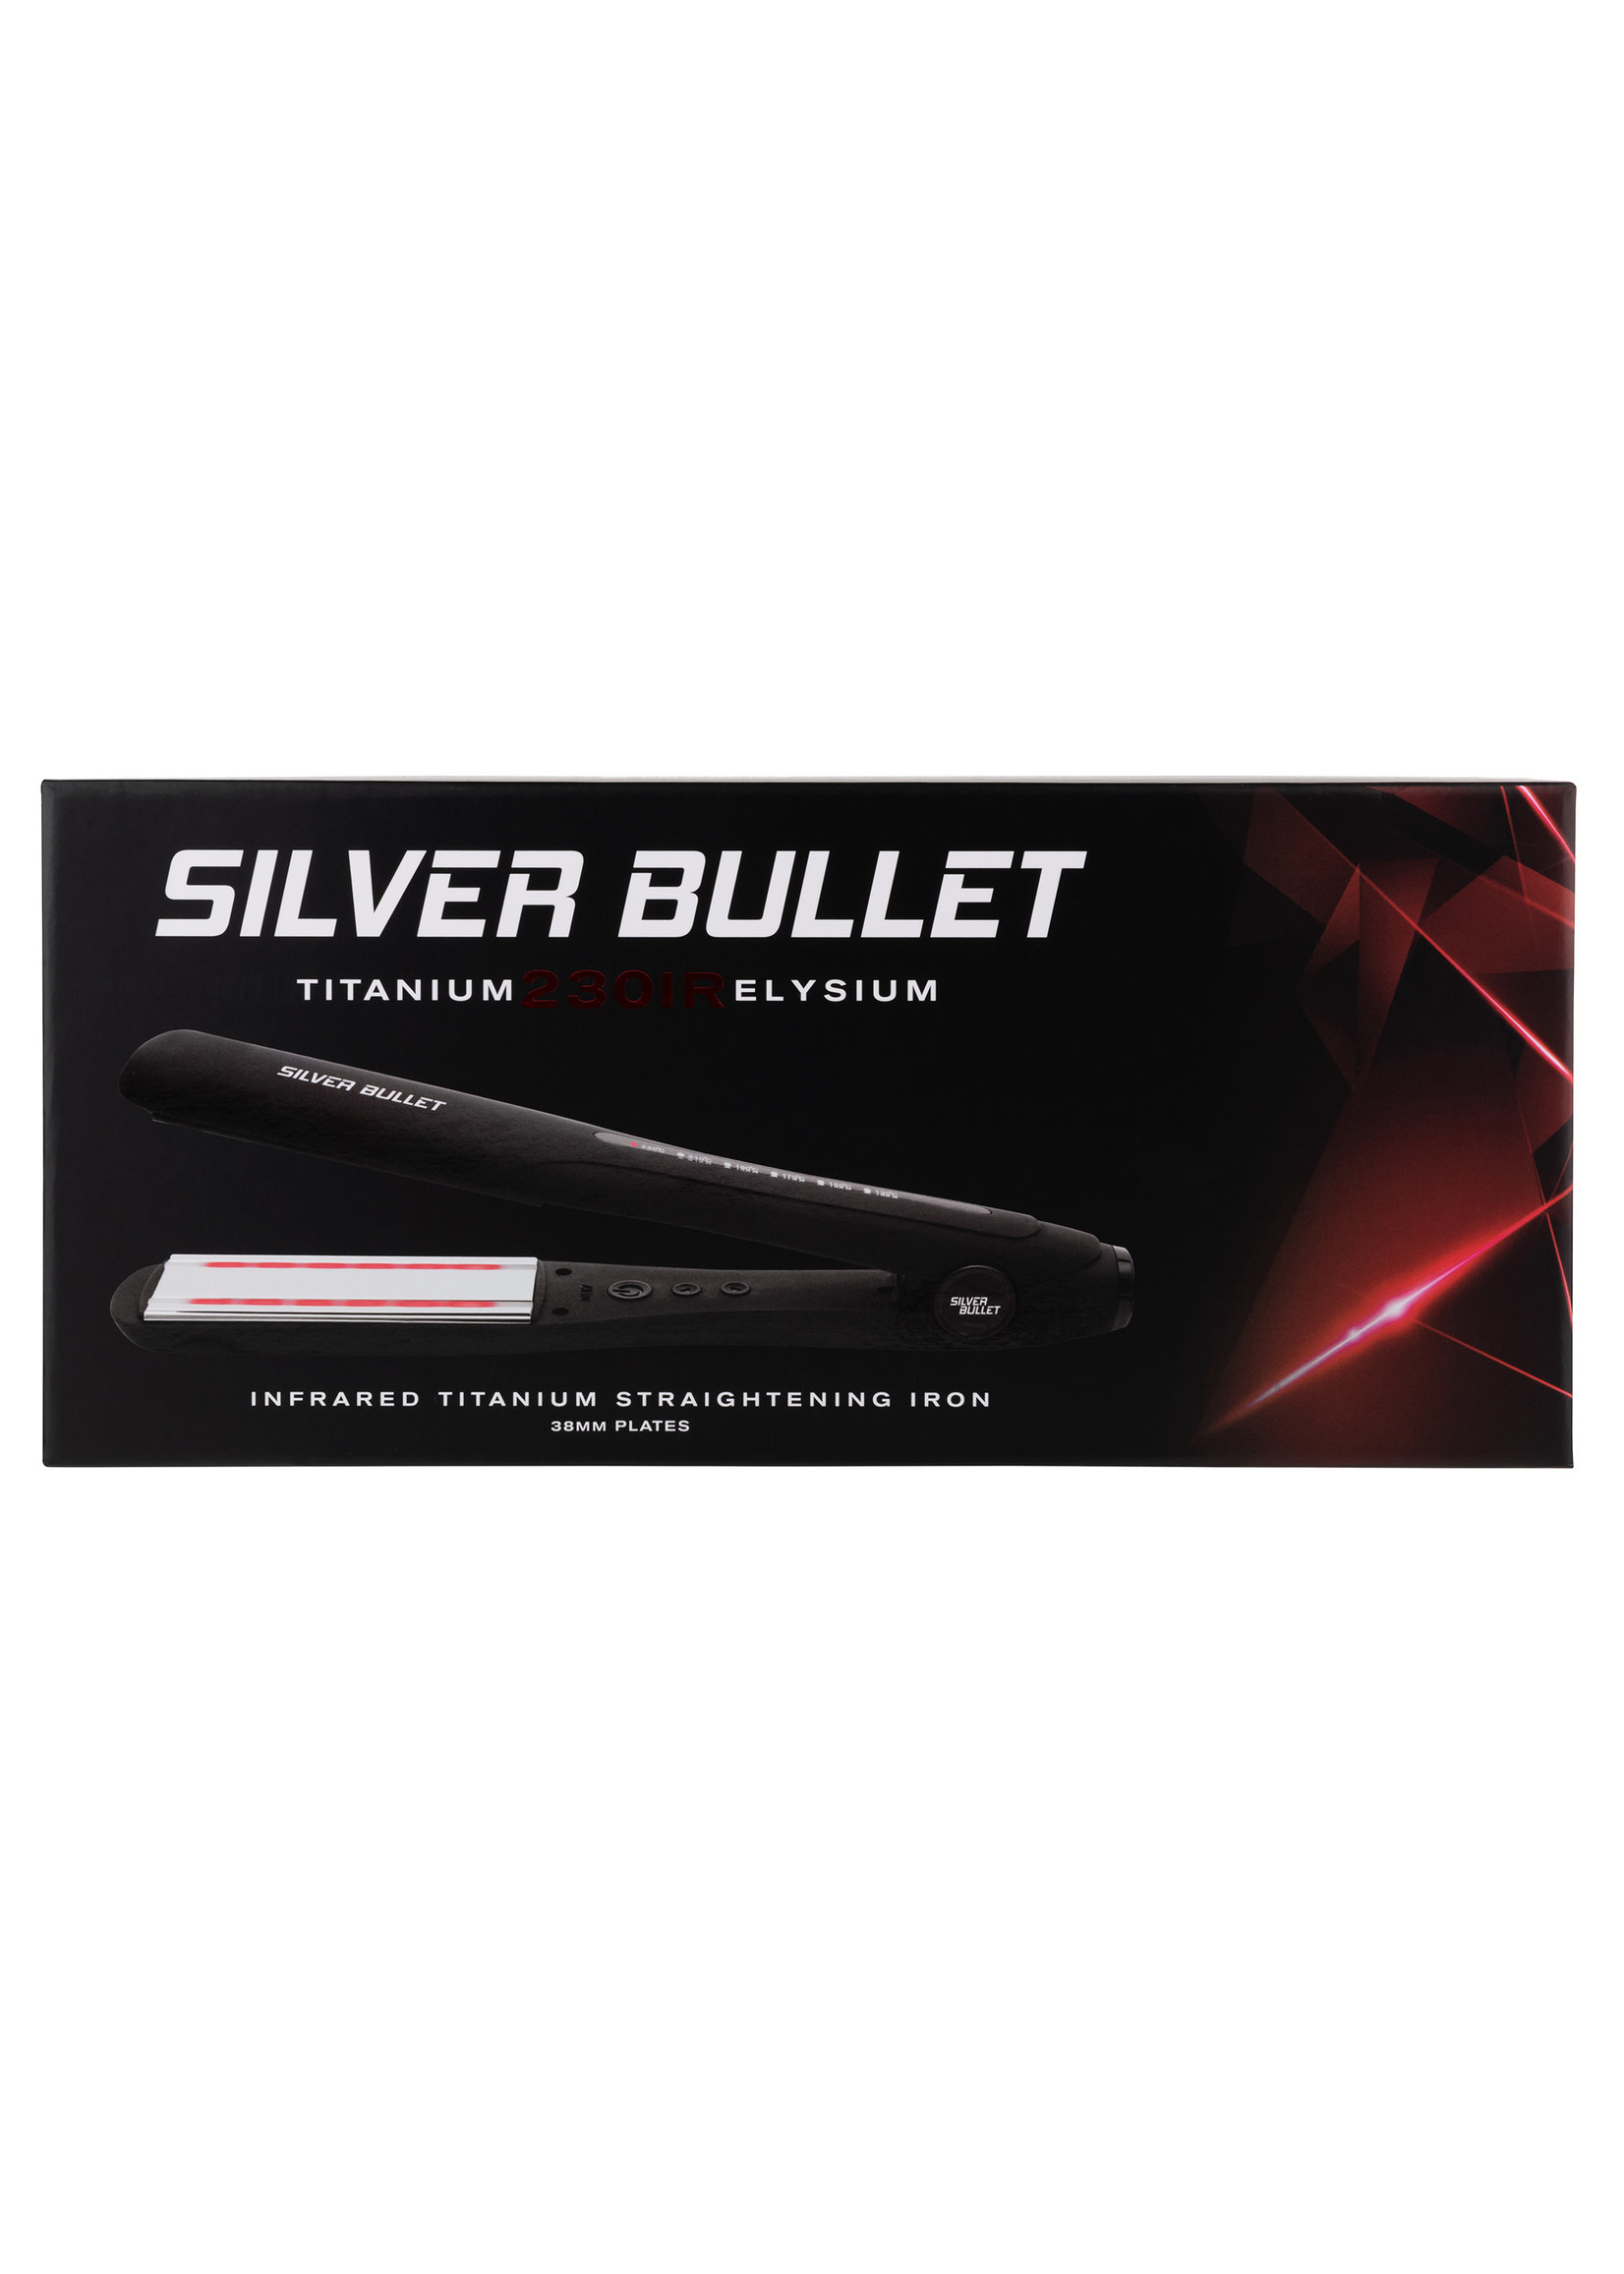 Silver Bullet Silver Bullet Titanium 230IR Elysium Straightener - 38mm Wide Plates